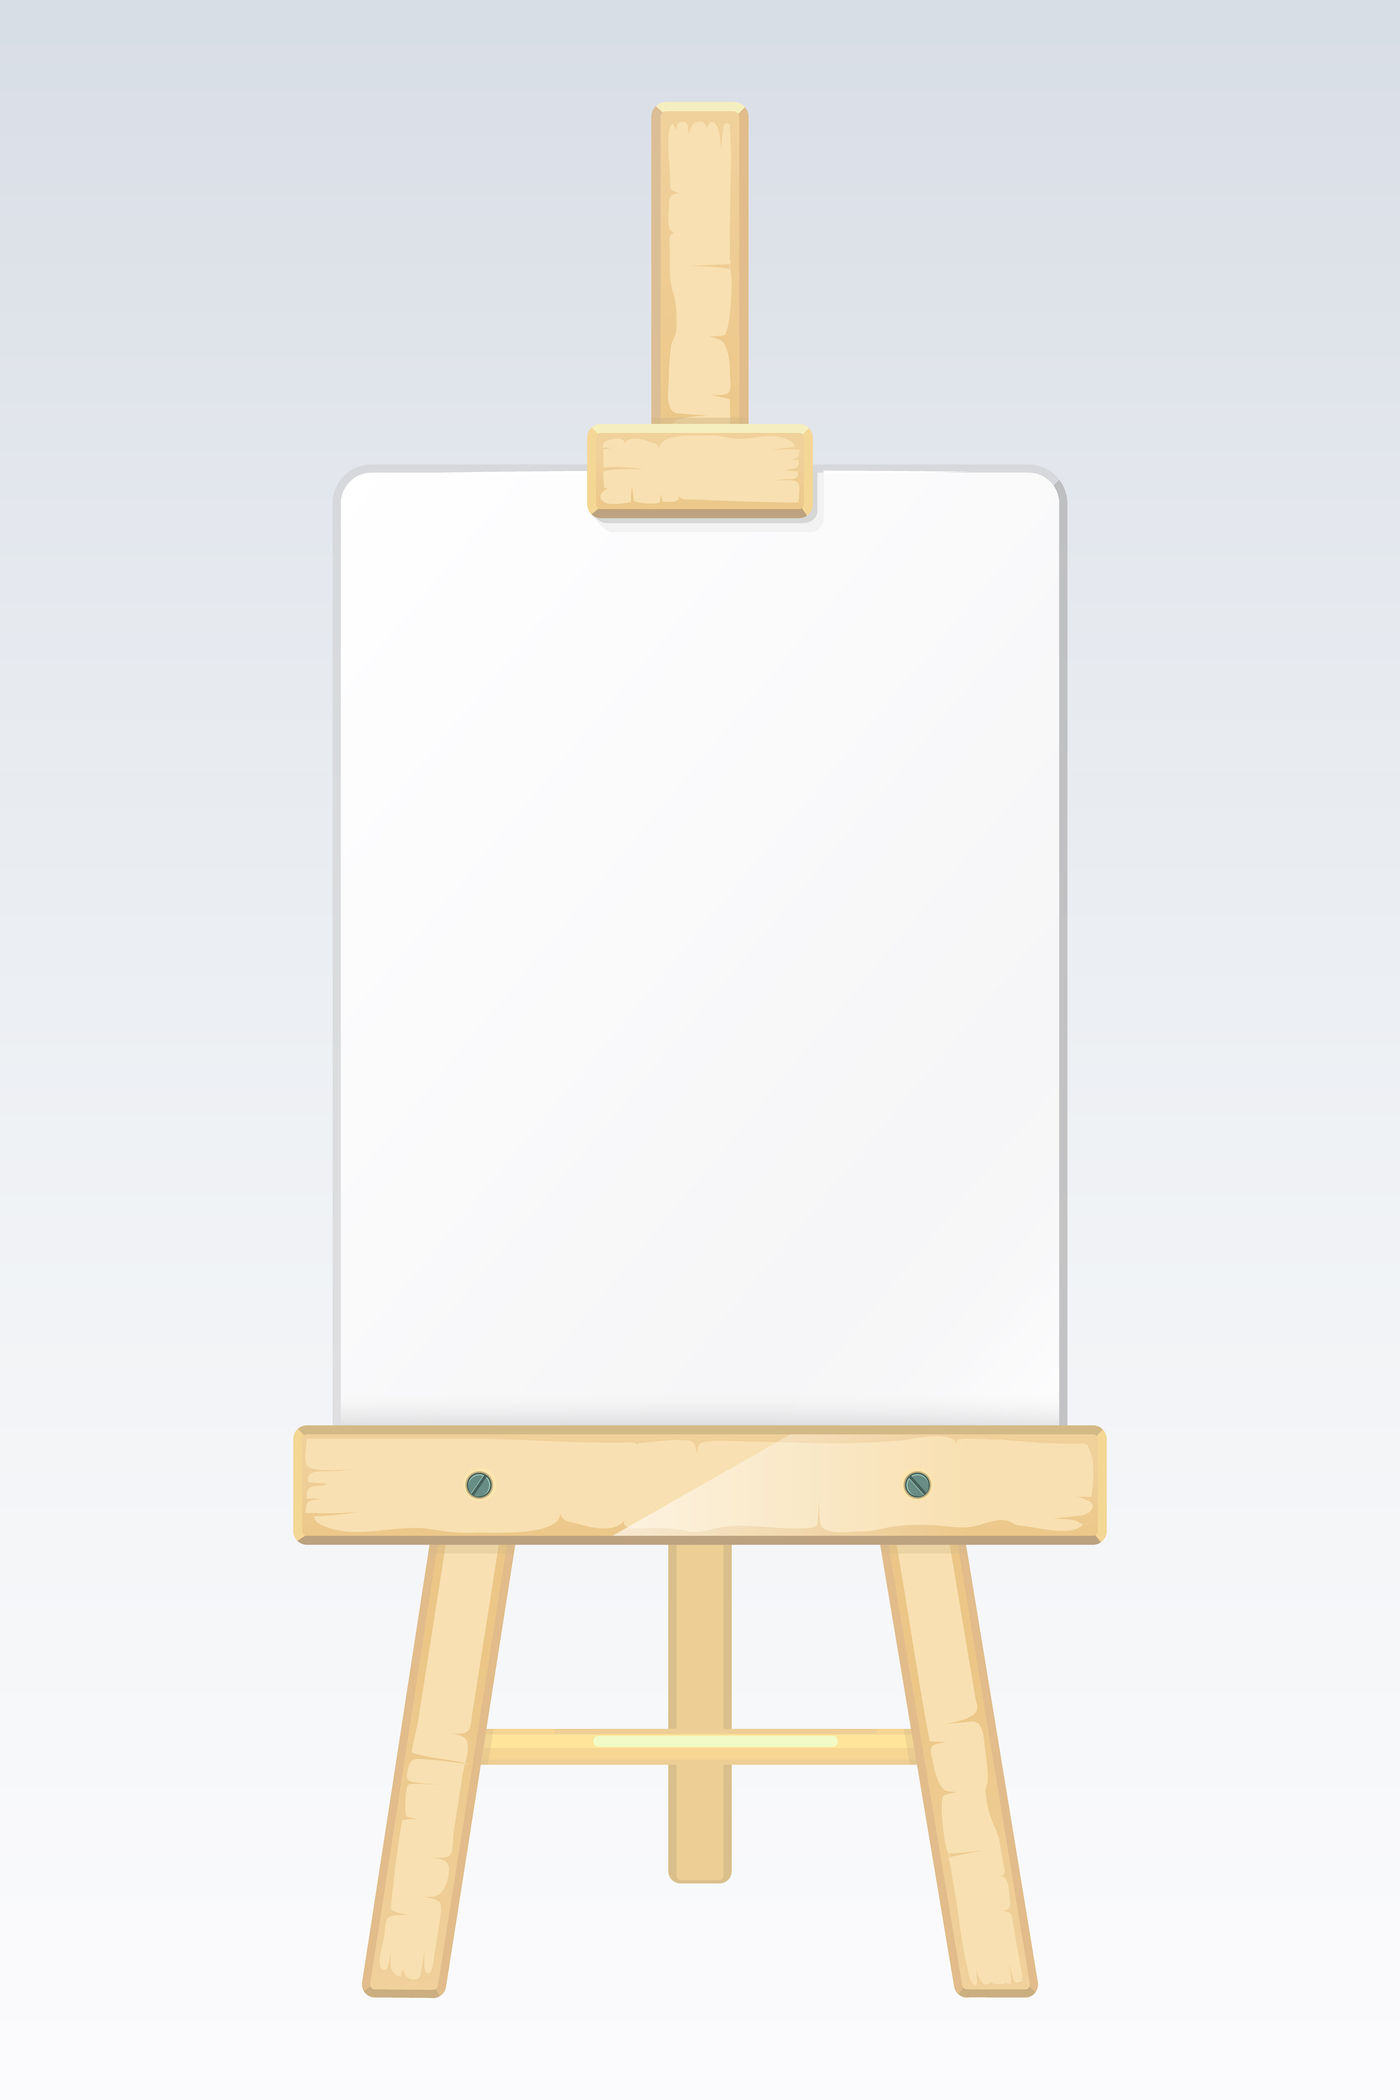 https://media1.thehungryjpeg.com/thumbs2/ori_3489690_15c5e6636c0b07b4f3d8c1f2338b88be65ed57fc_easel-painting-desk-drawing-board-with-blank-white-canvas-vector-ill.jpg